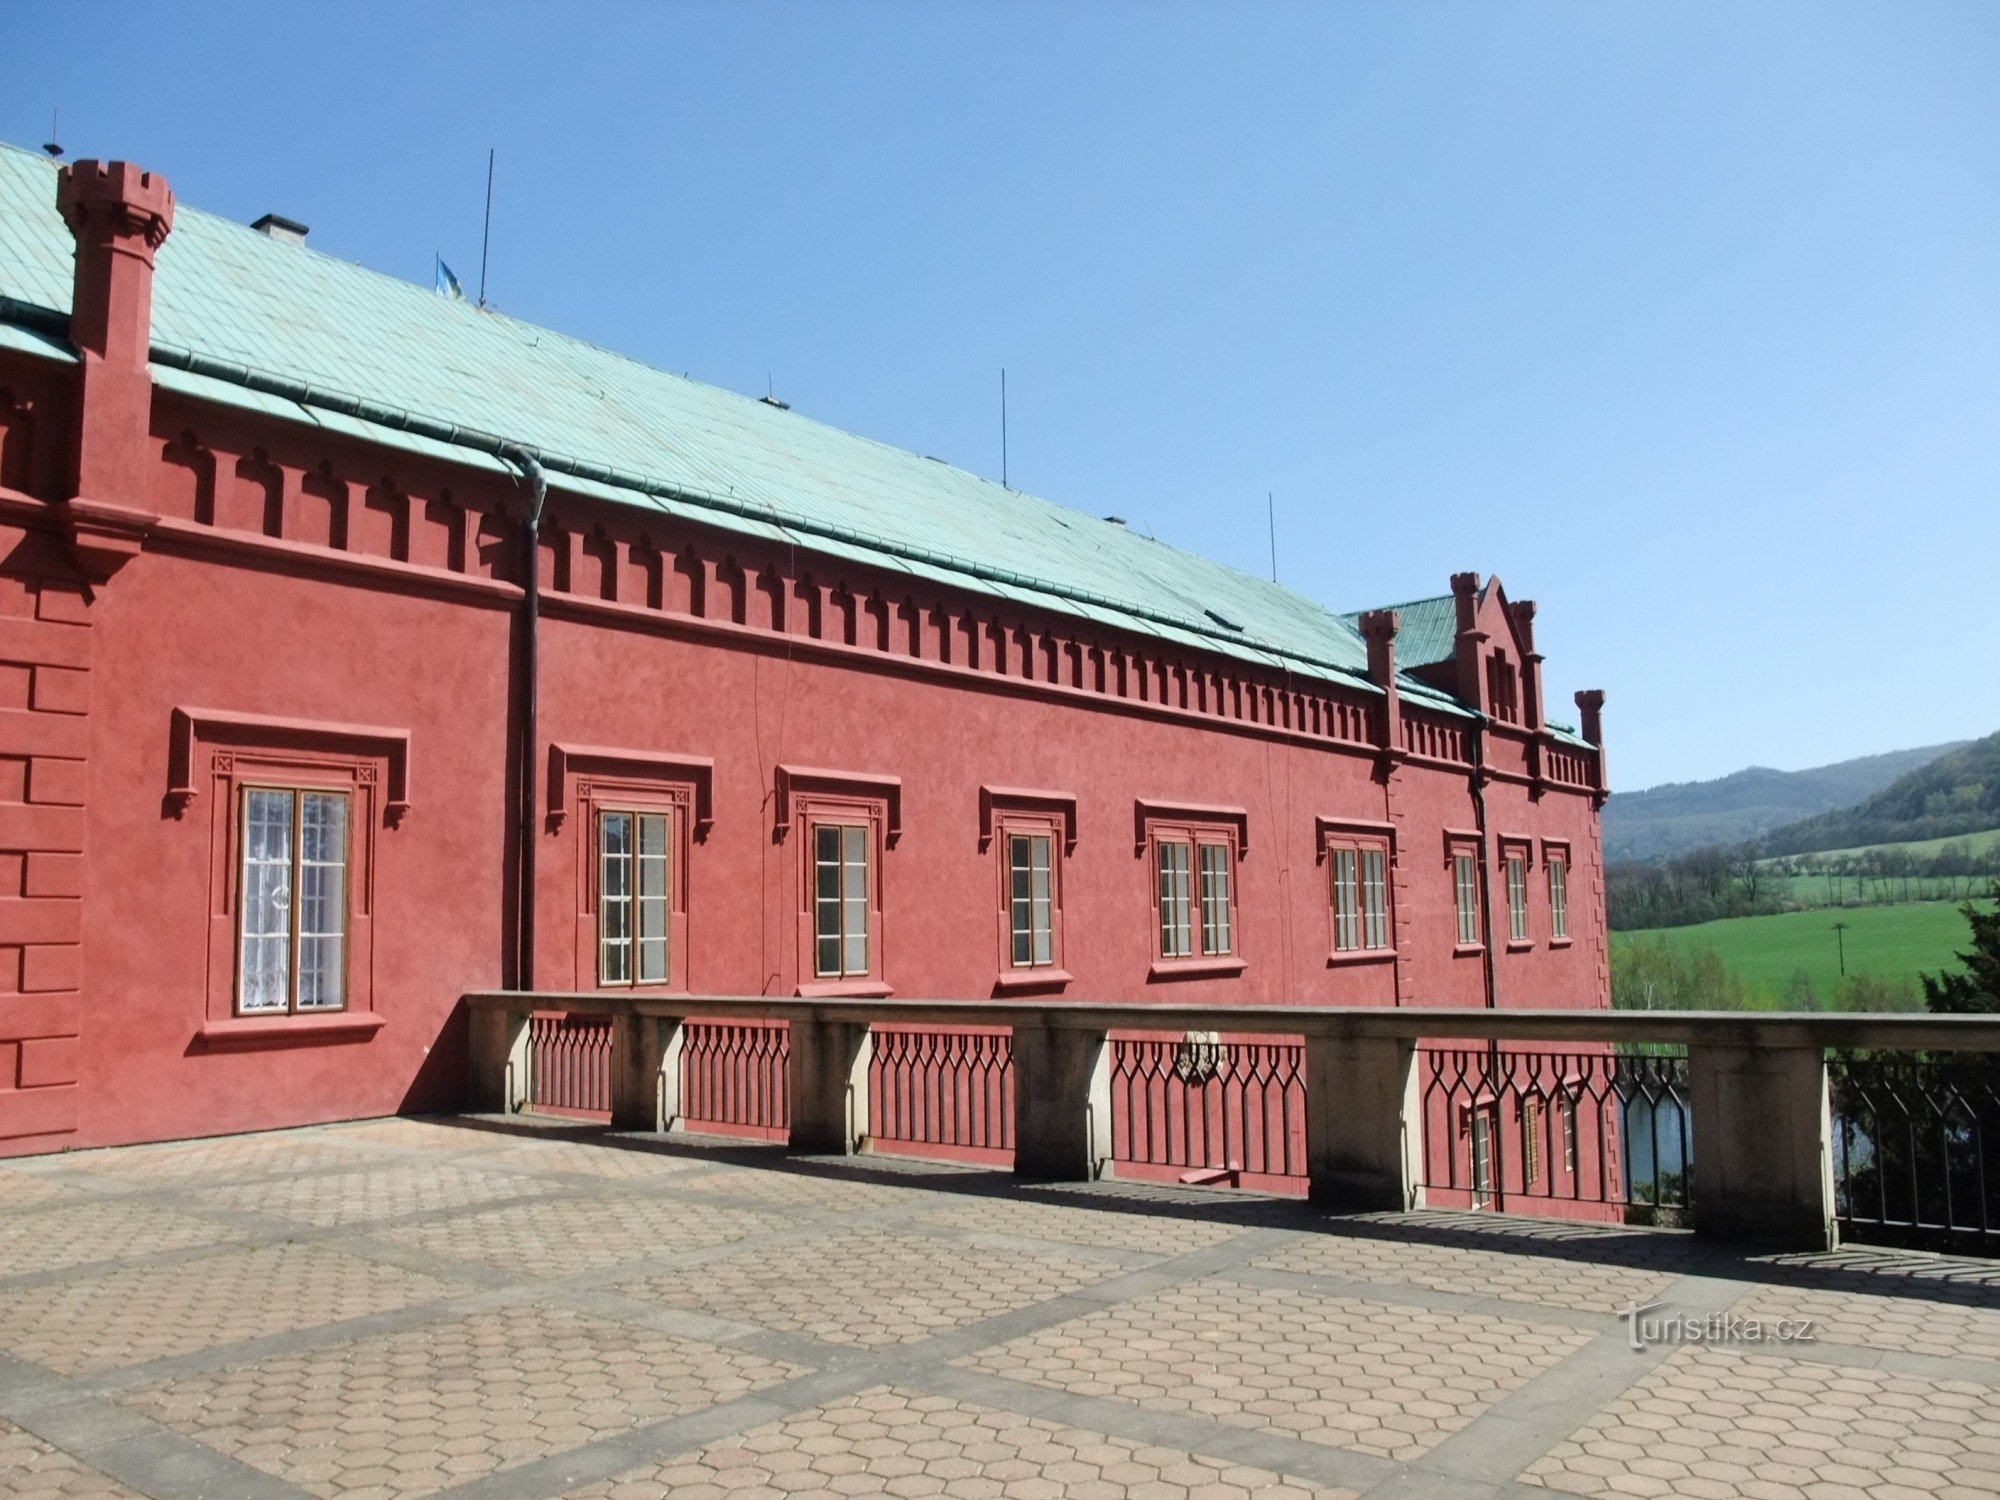 Castelo de Klášterec nad Ohří - museu de porcelana